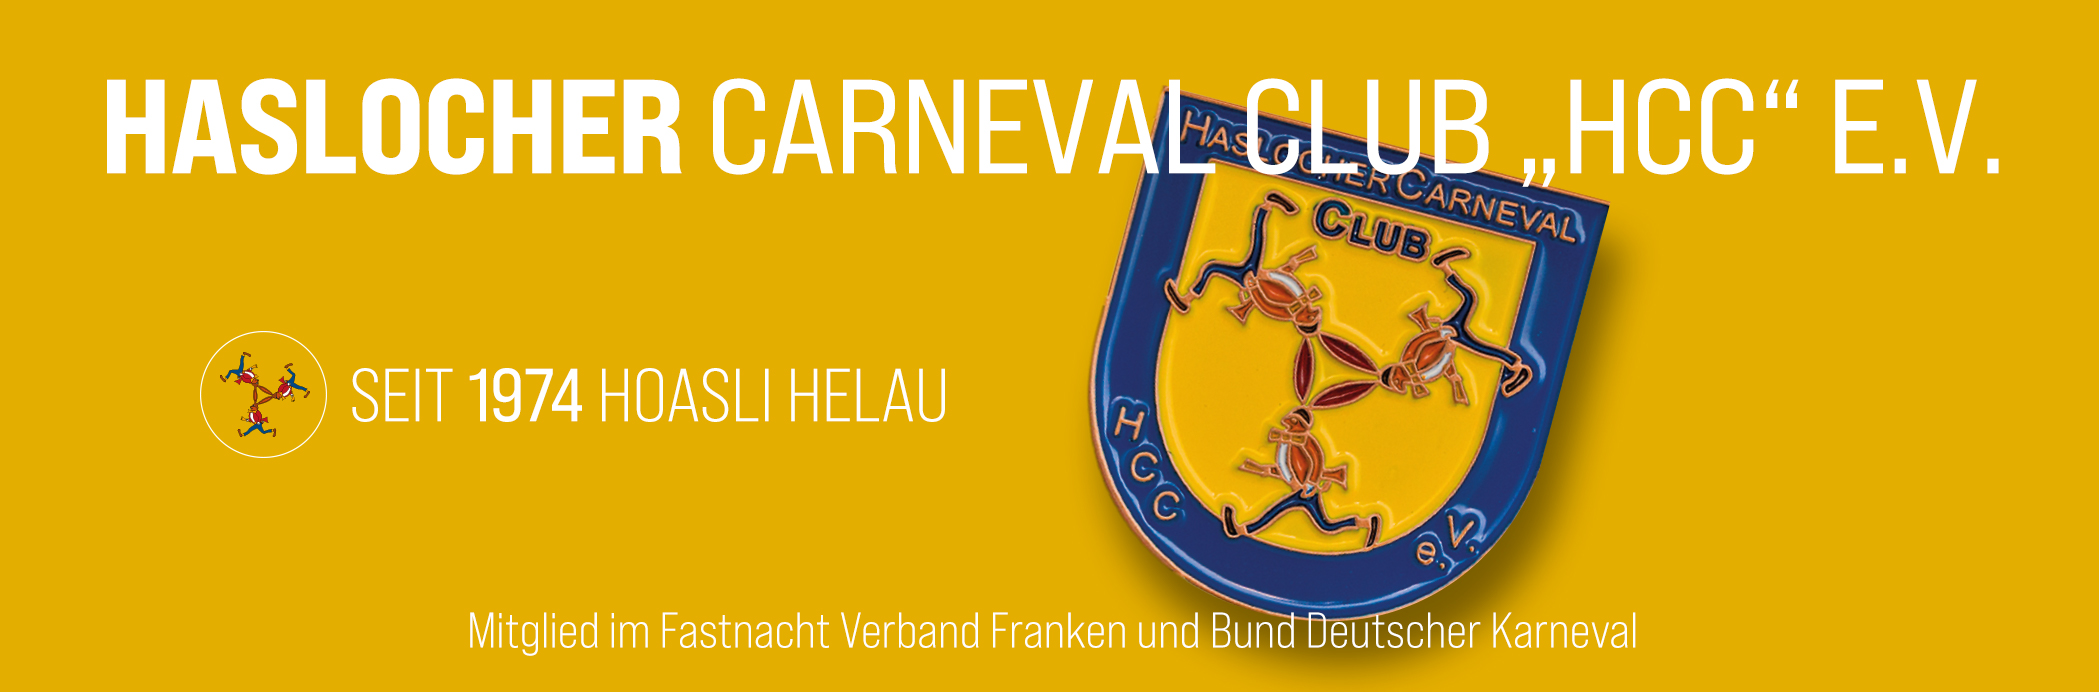 (c) Haslocher-carneval-club.de